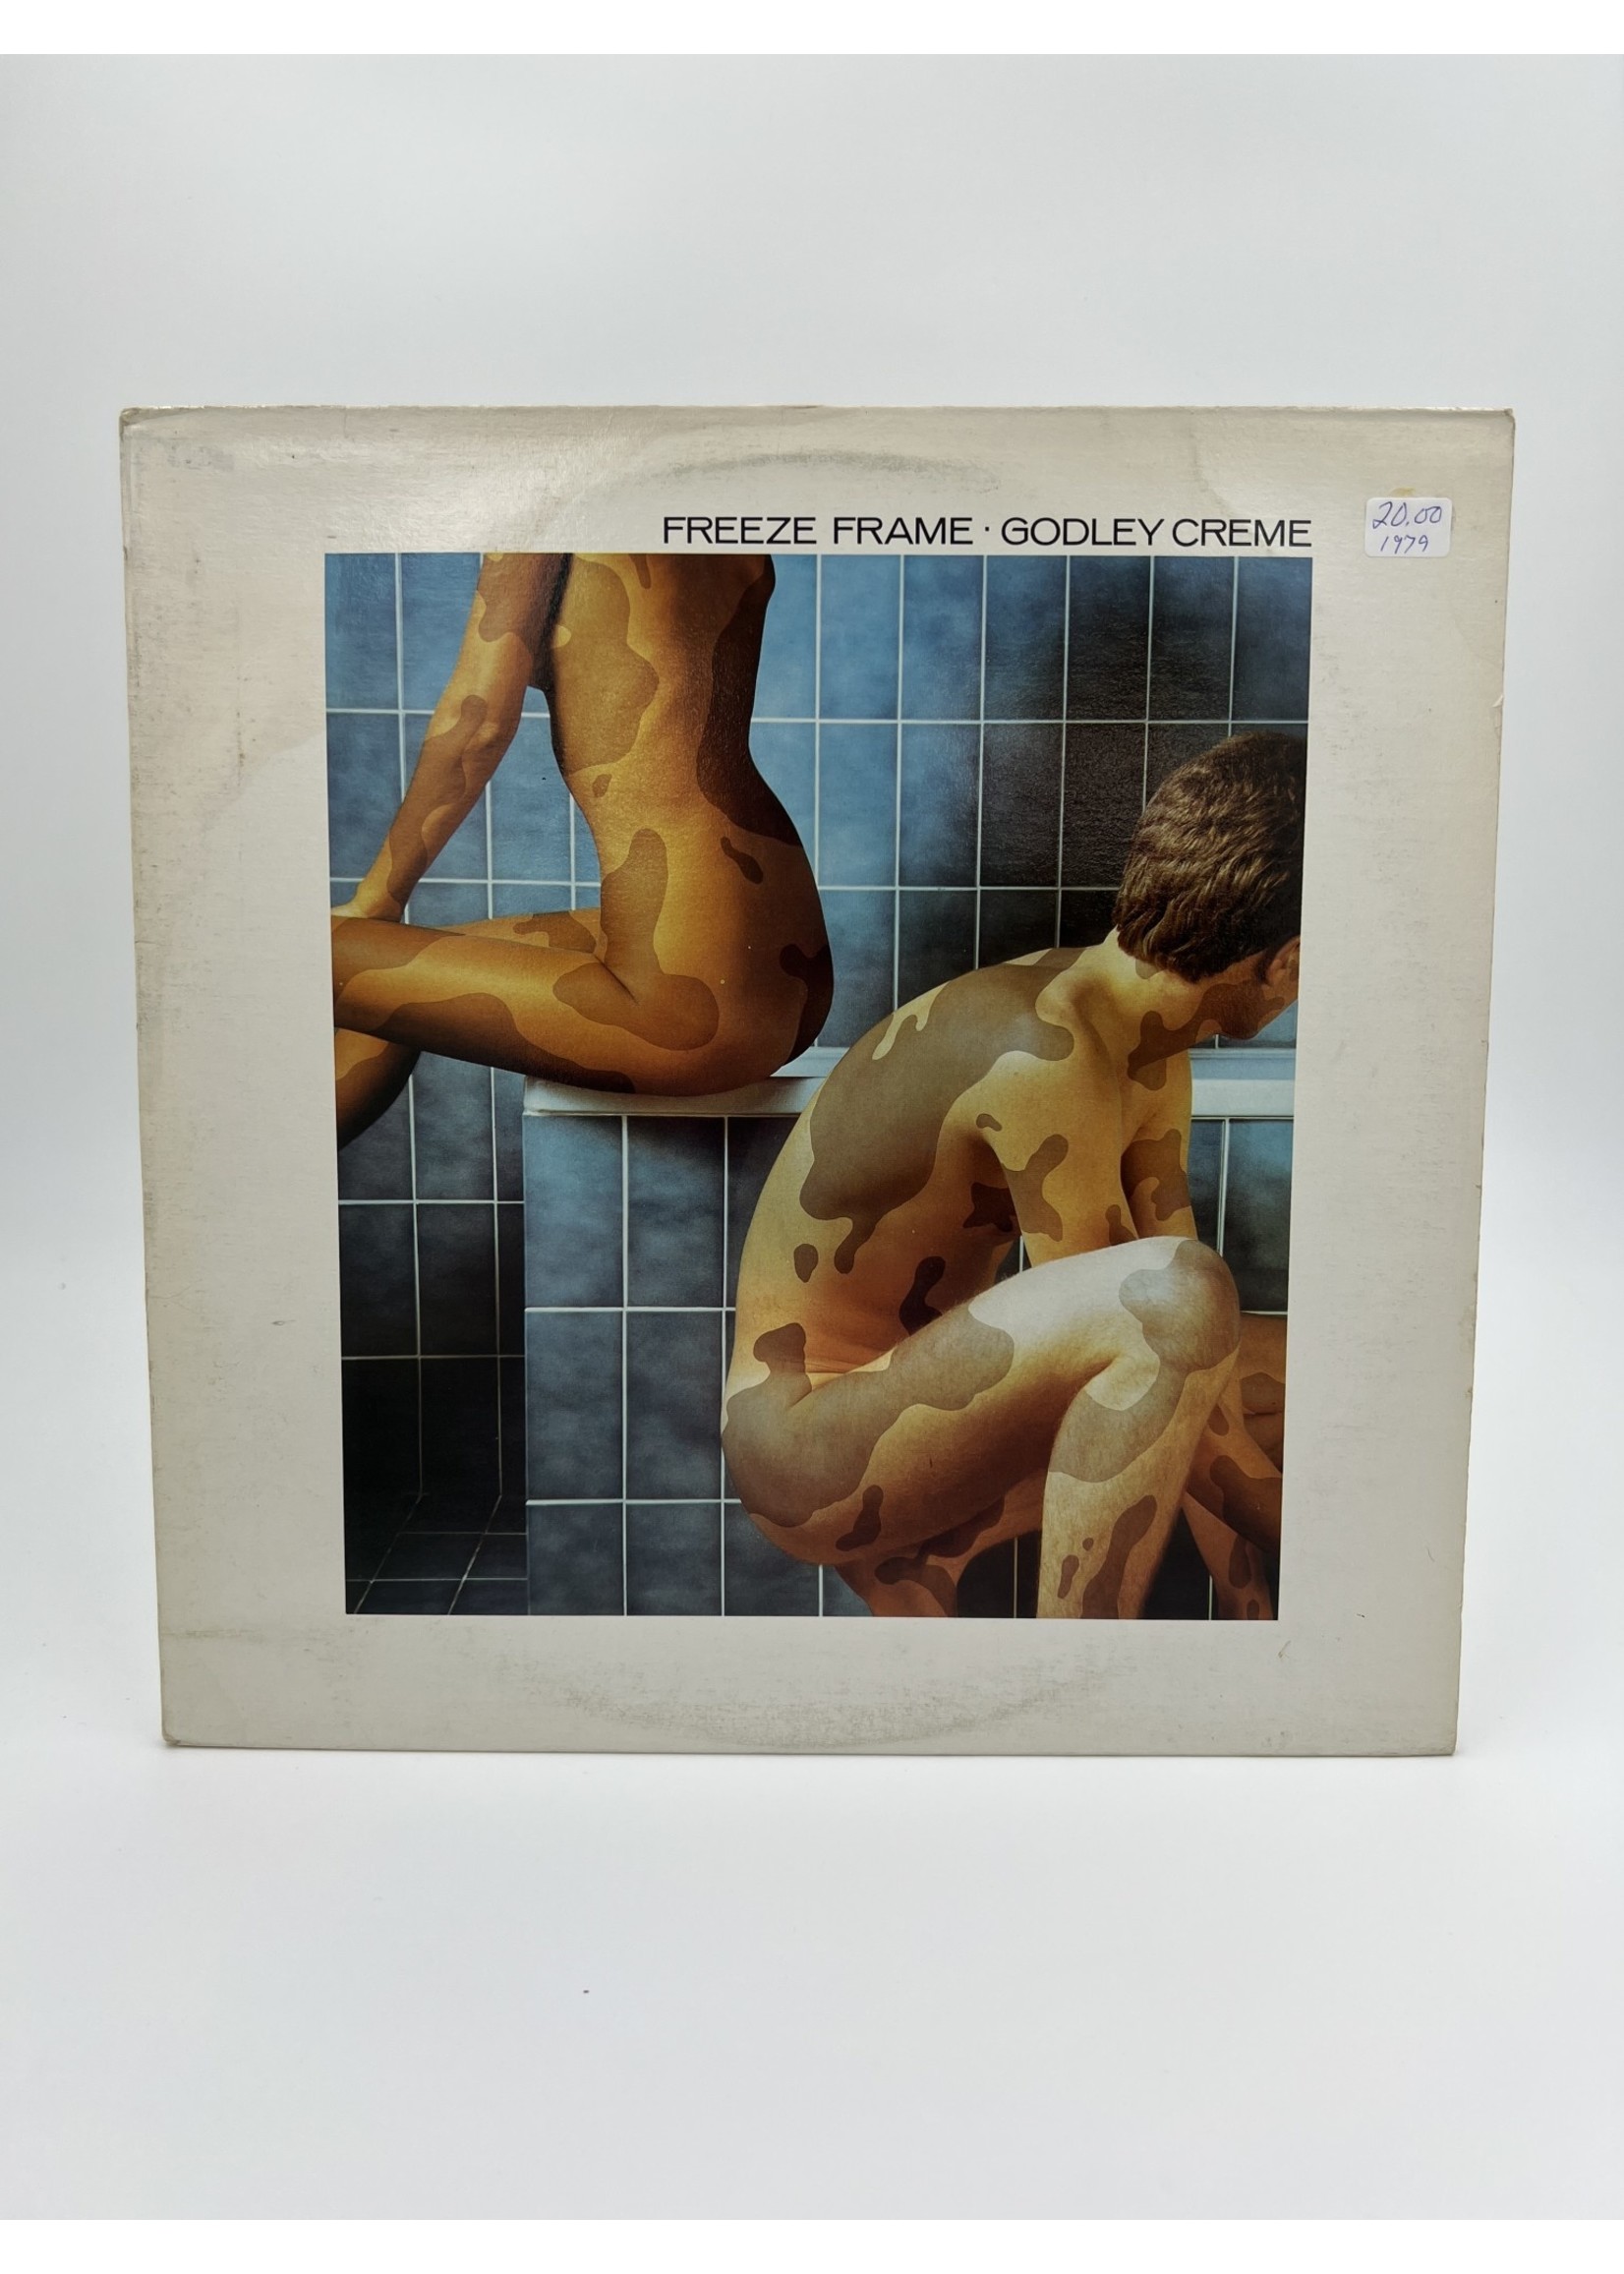 LP Freeze Frame Godley Creme Lp Record